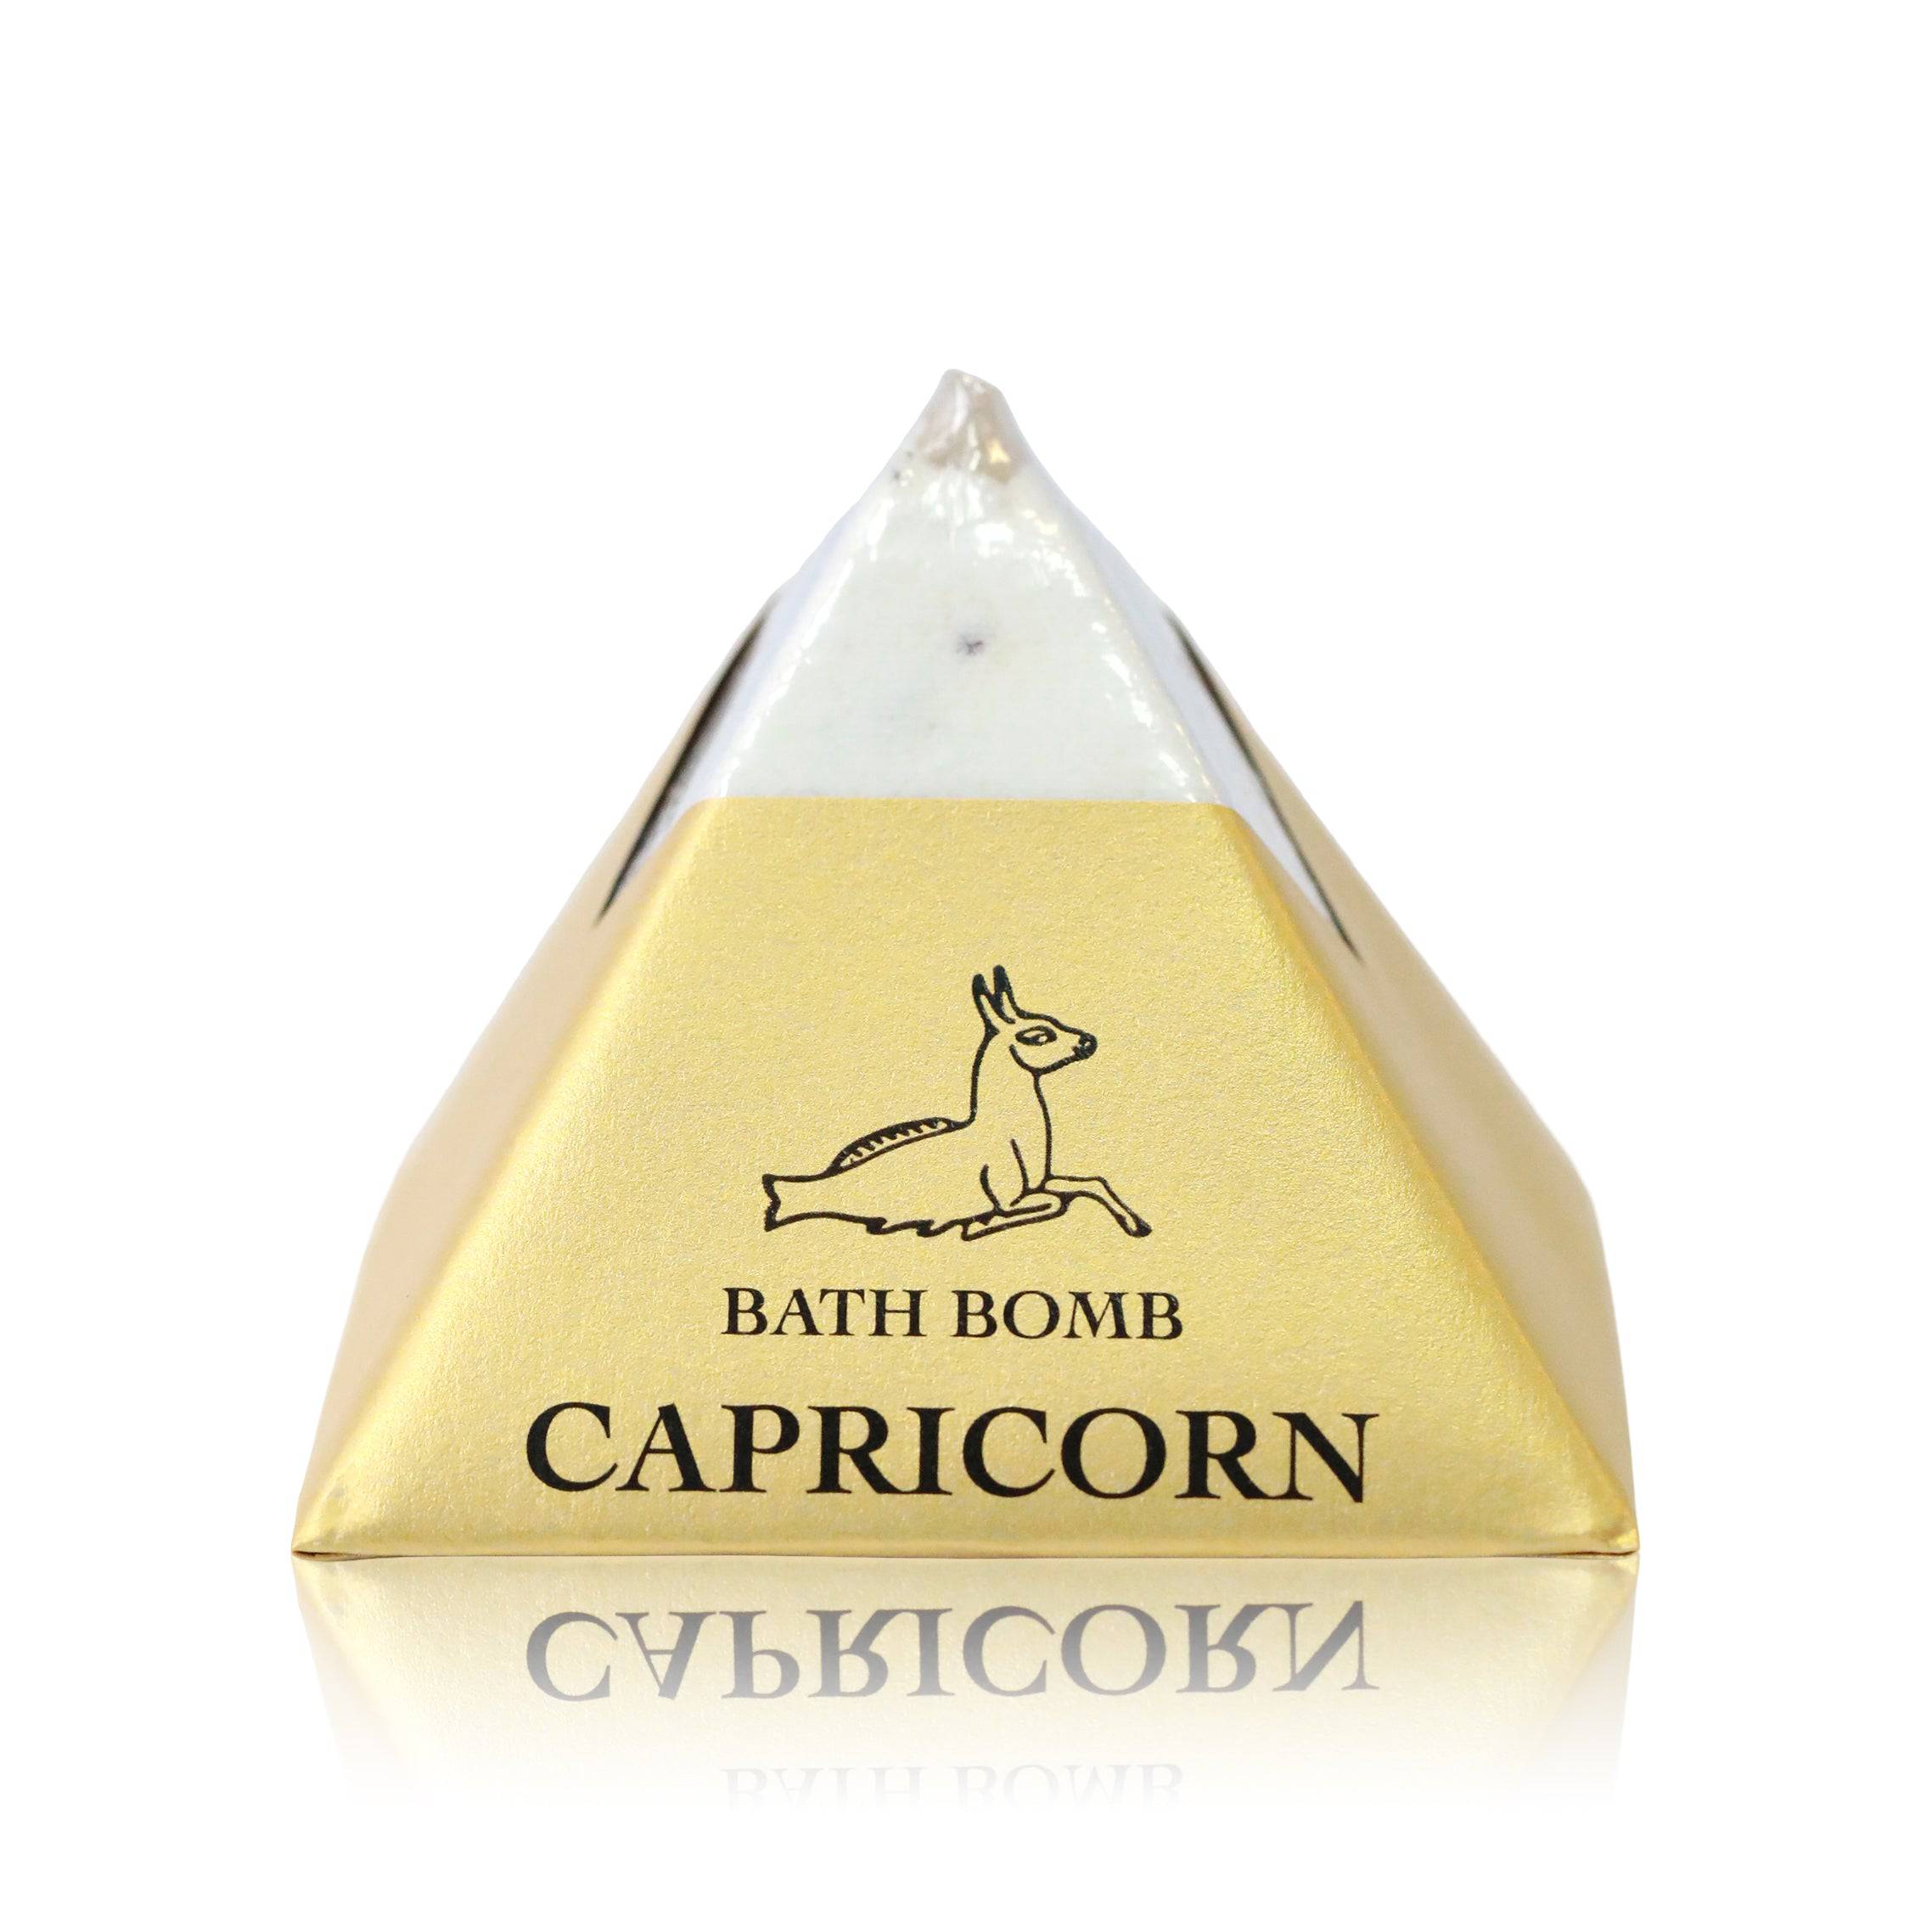 Capricorn Zodiac Sign Pyramid Bath Bomb - The Gilded Witch